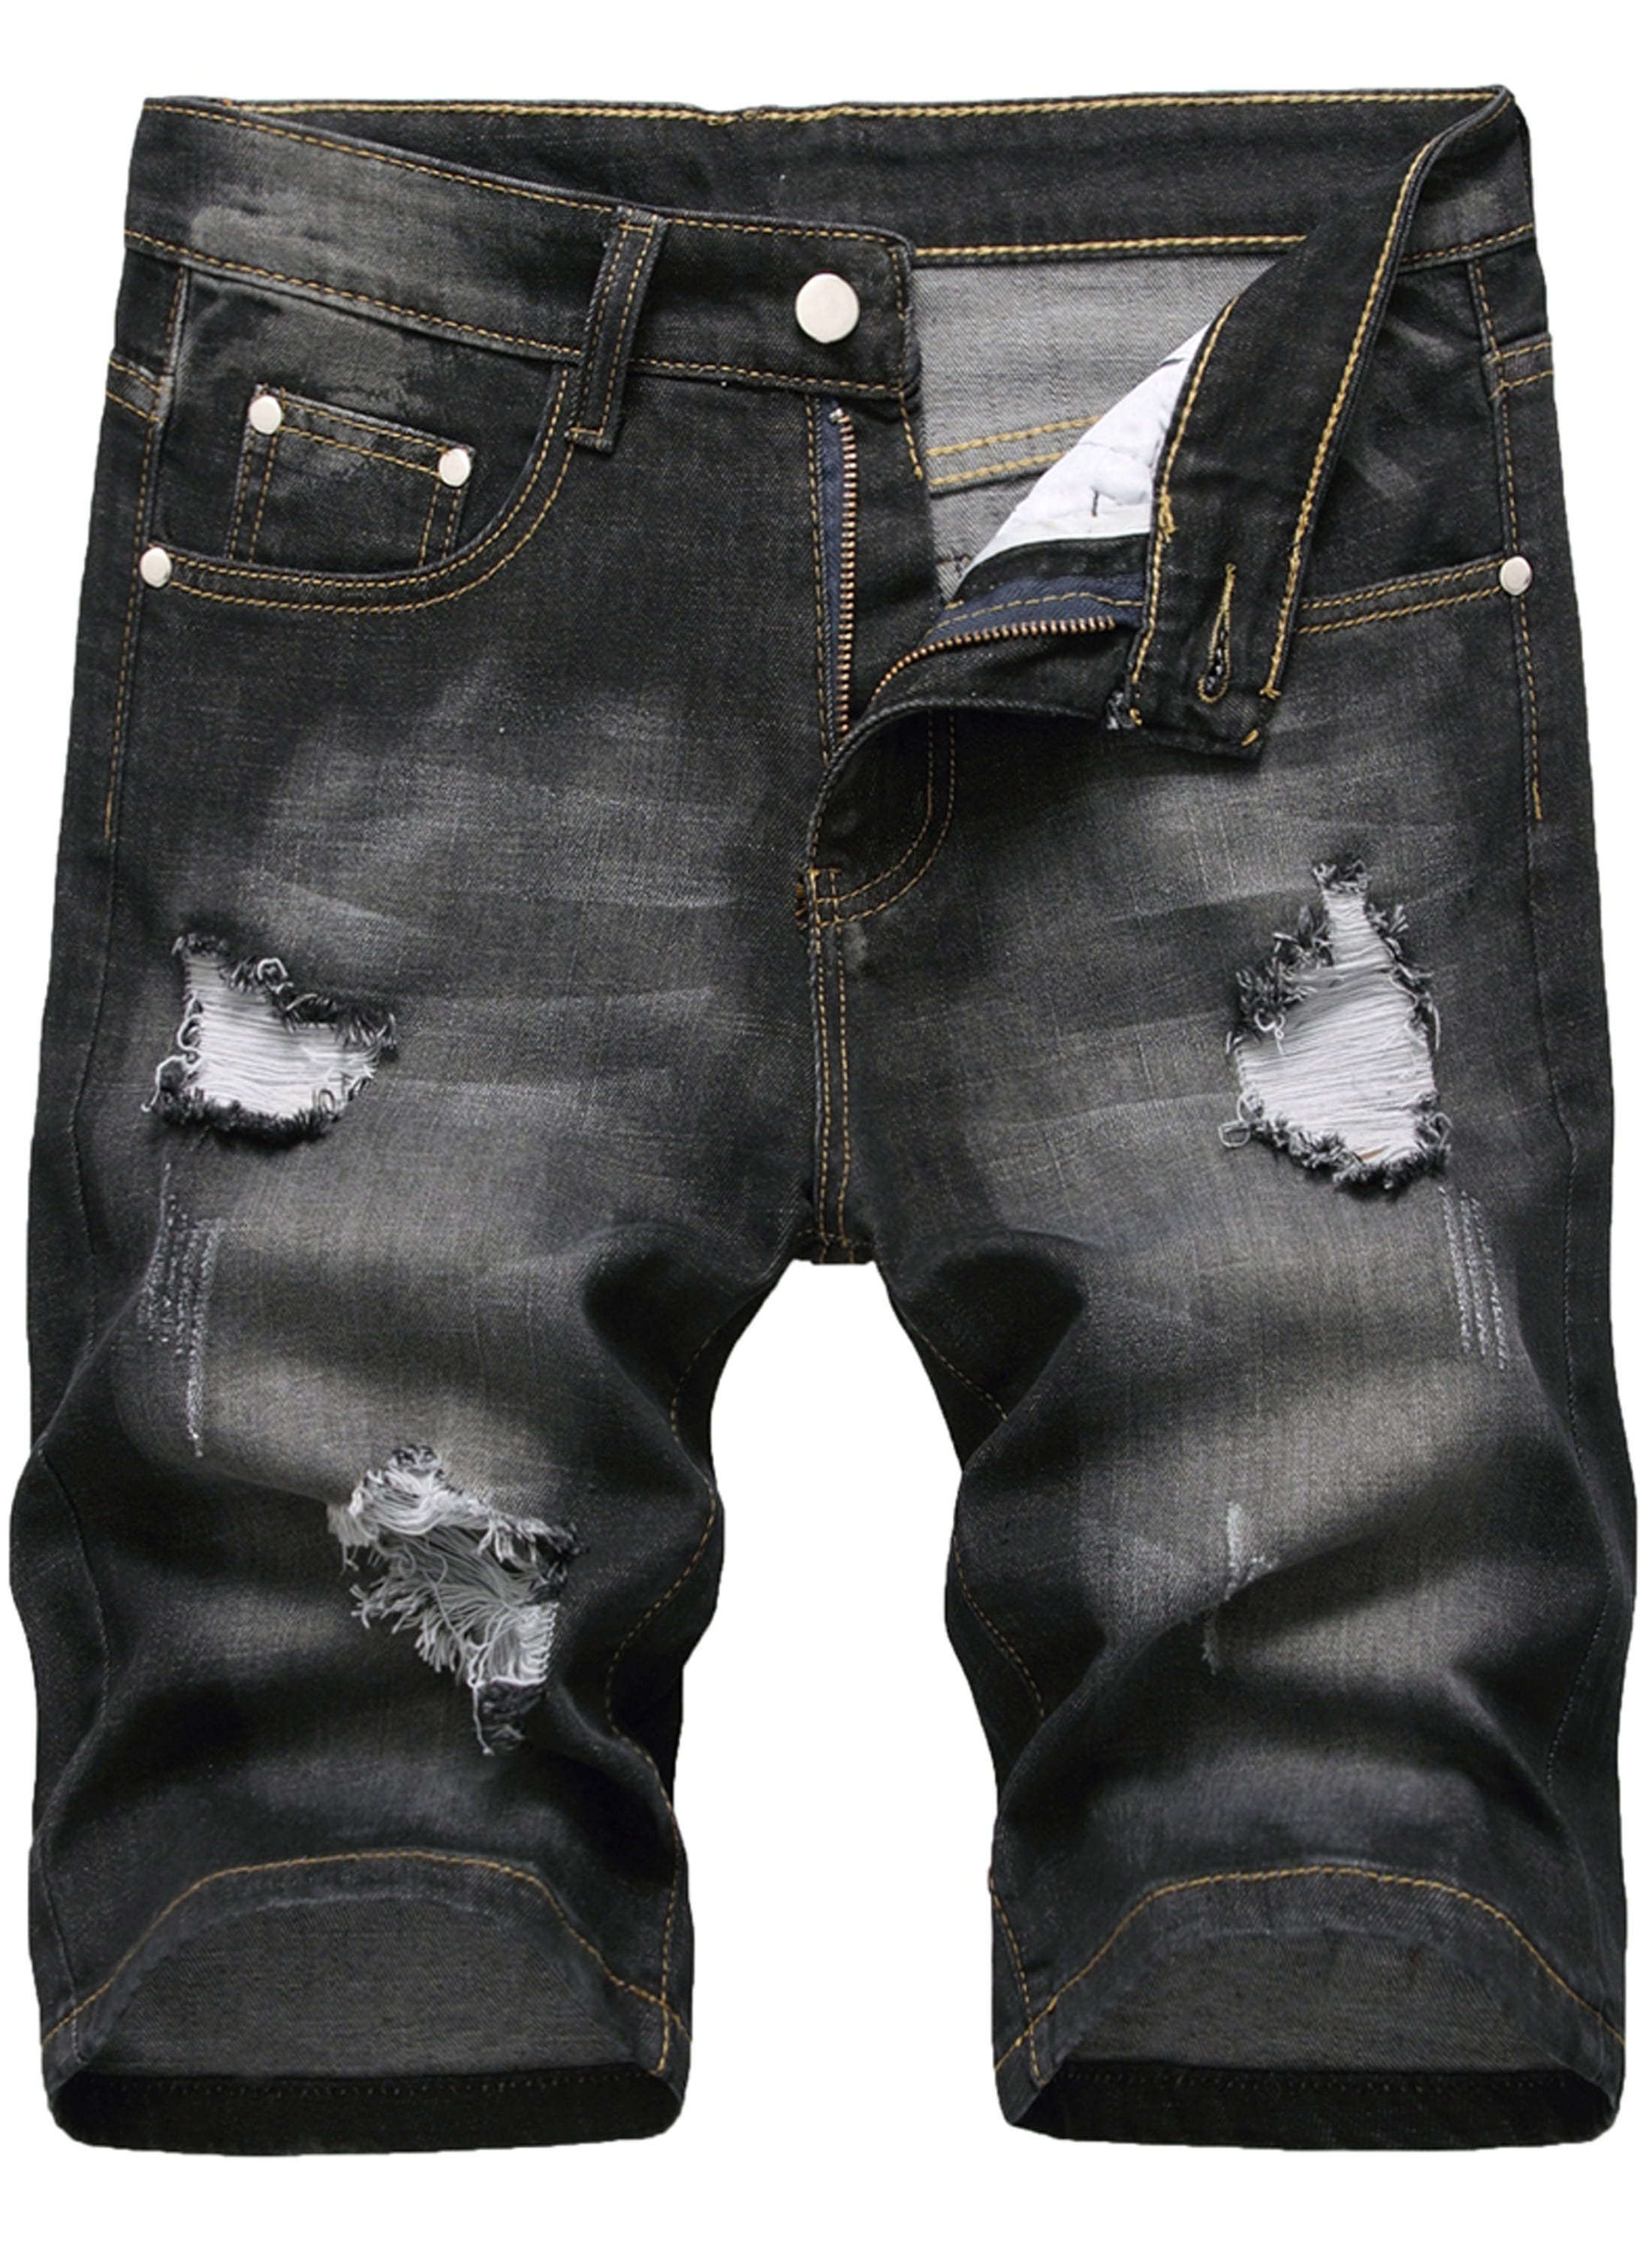 Jorts - Are Jean Shorts For Men Stylish? (Looking Good In Denim Shorts)-donghotantheky.vn